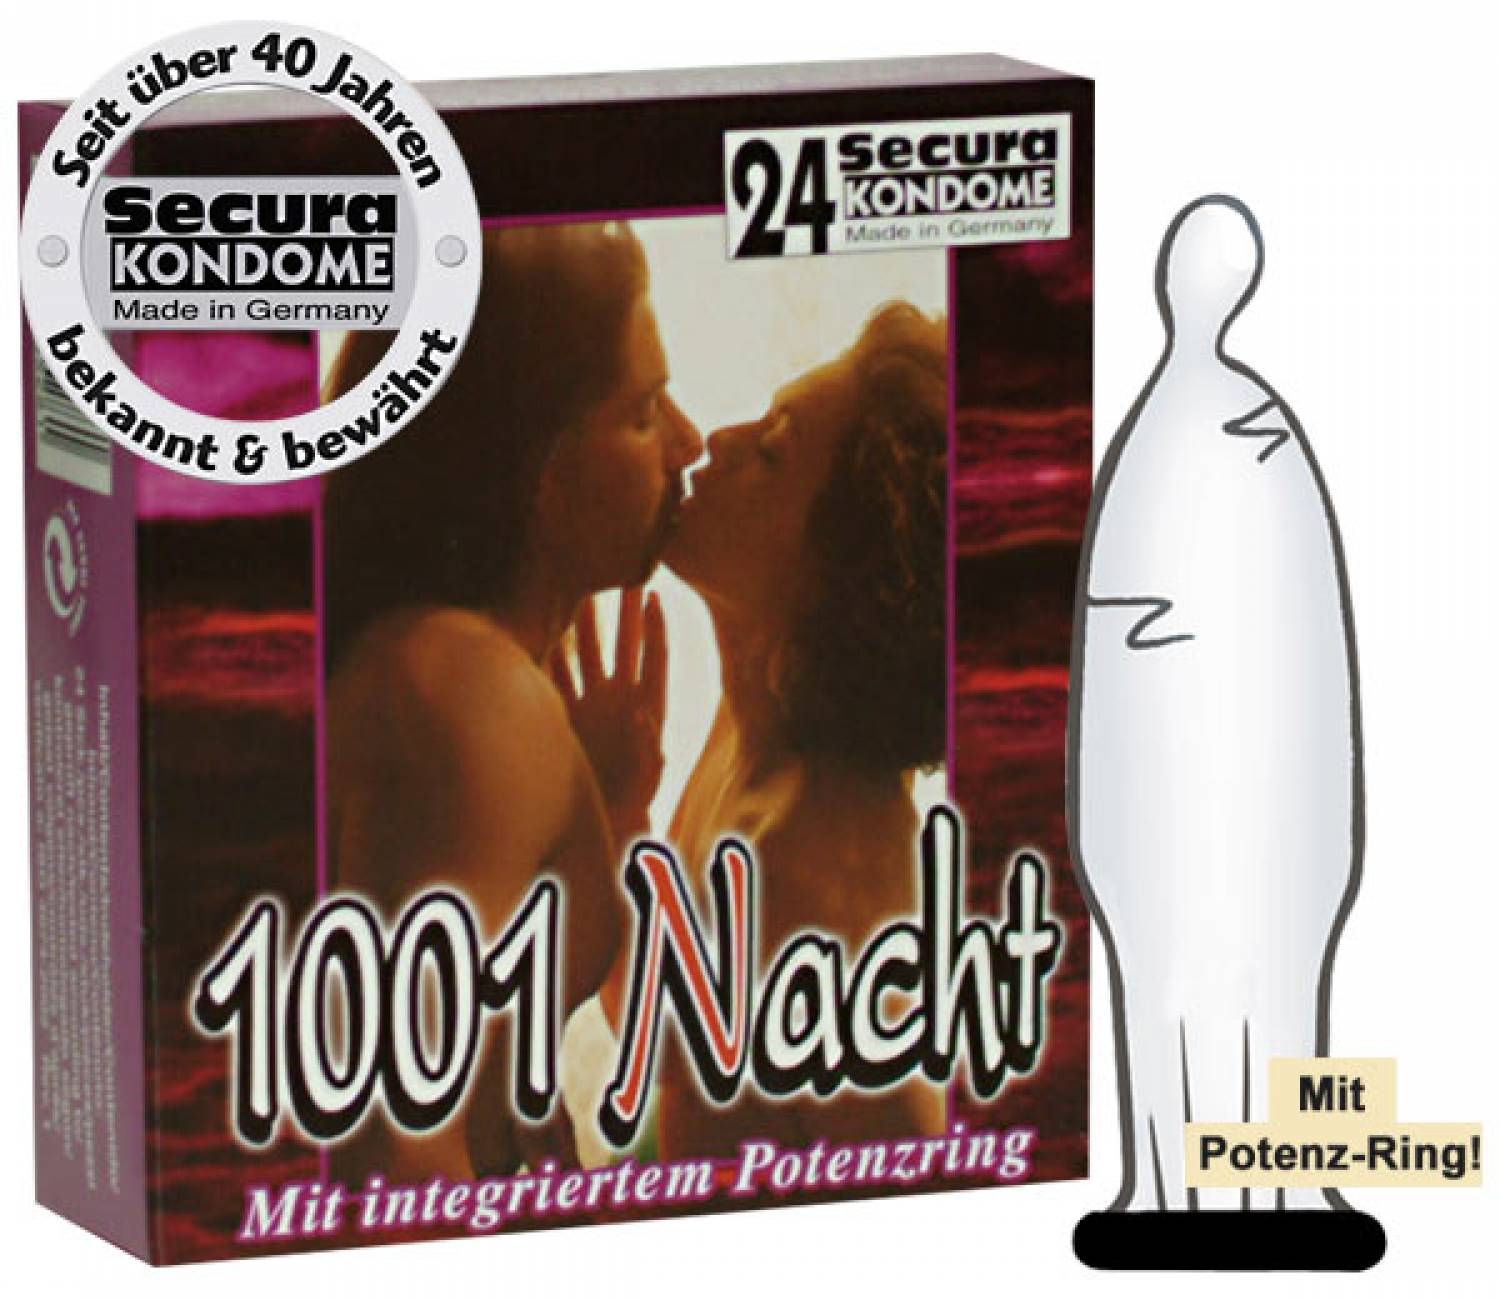 Secura Kondome Secura 1001 Nacht 24er